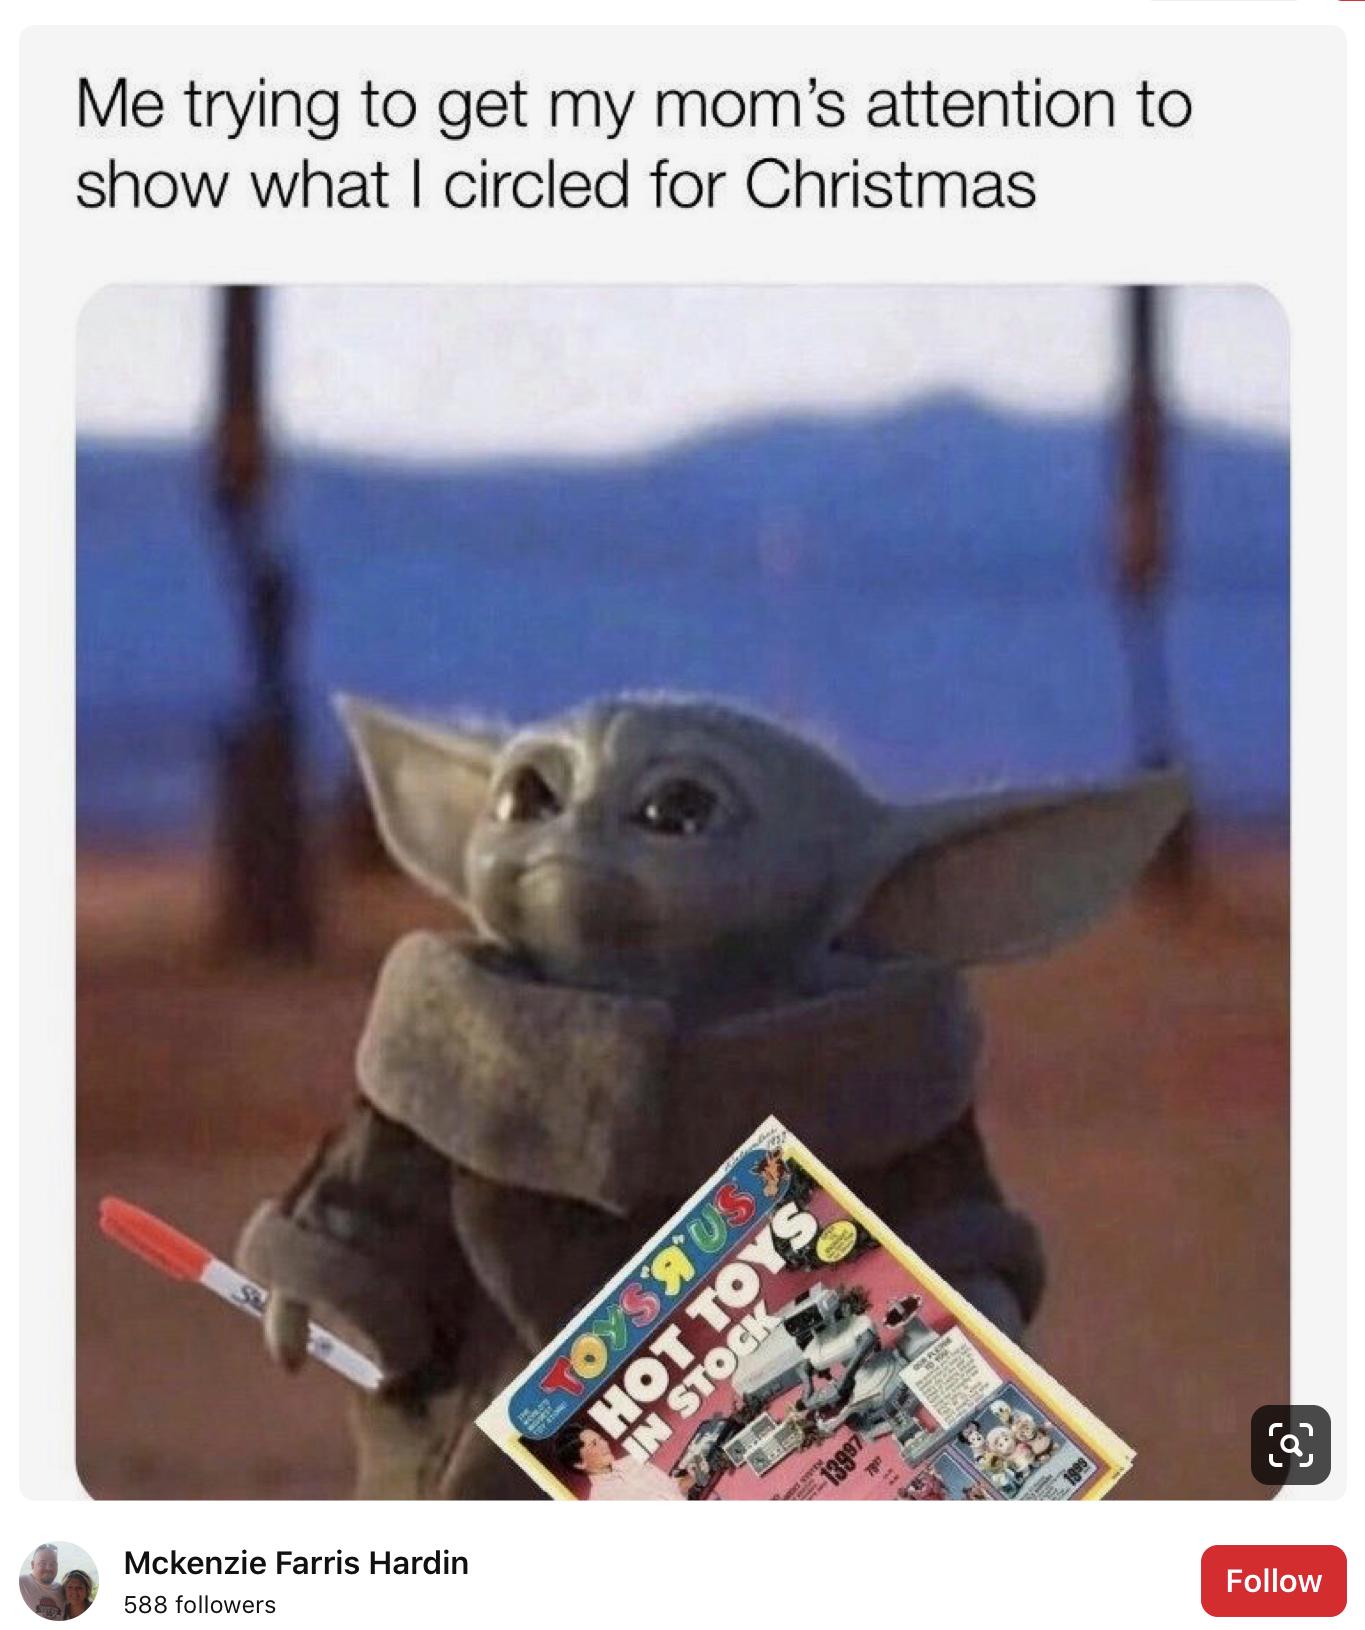 19 Adorable Baby Yoda Memes for Christmas 2020 650